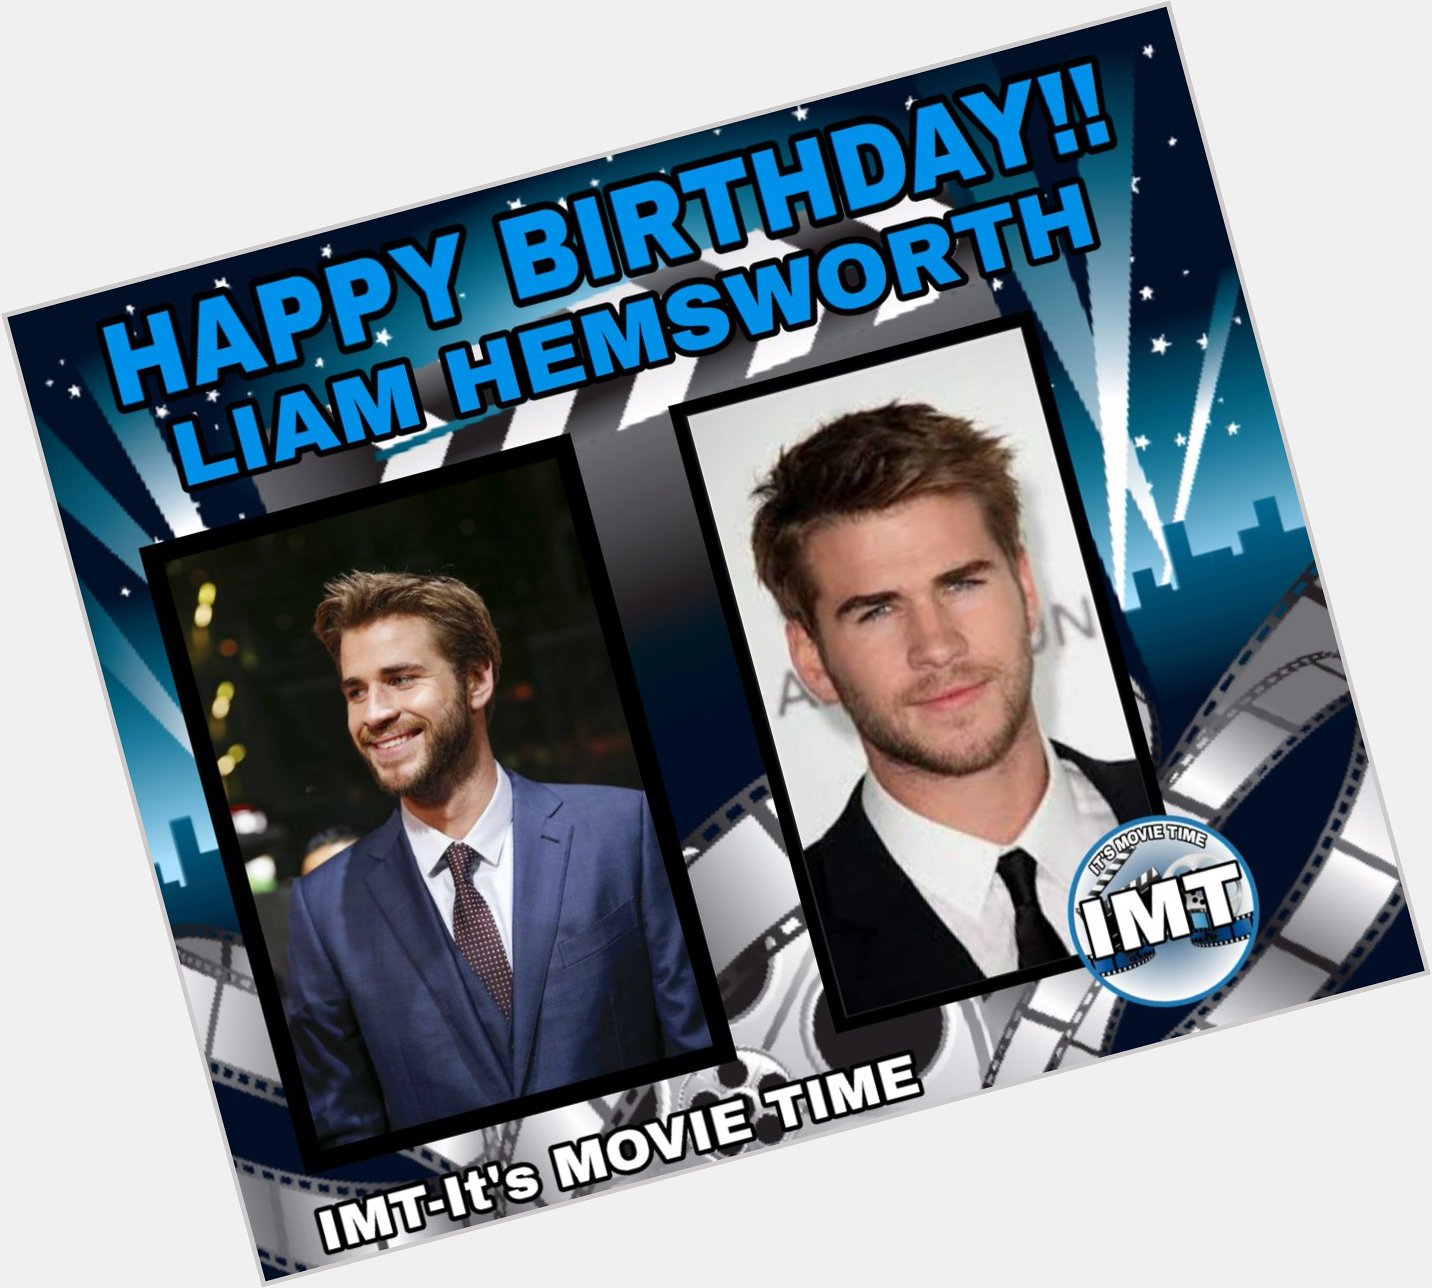 Happy Birthday to Liam Hemsworth! The actor is celebrating 30 years. 